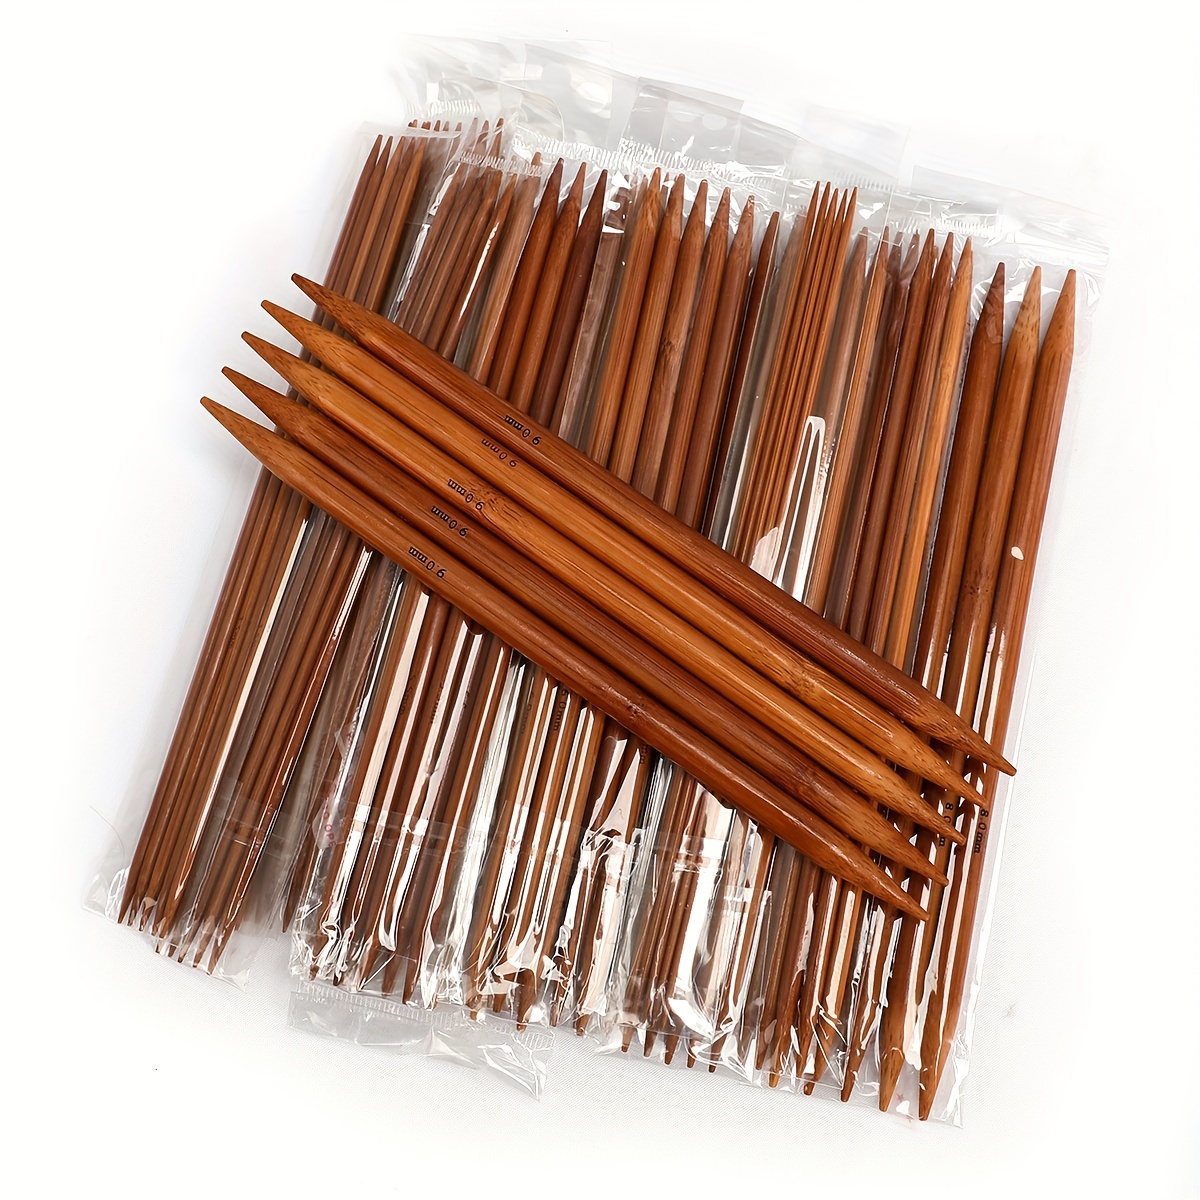 36PCS Bamboo Knitting Needles Set,betybedy Single Pointed Knitting